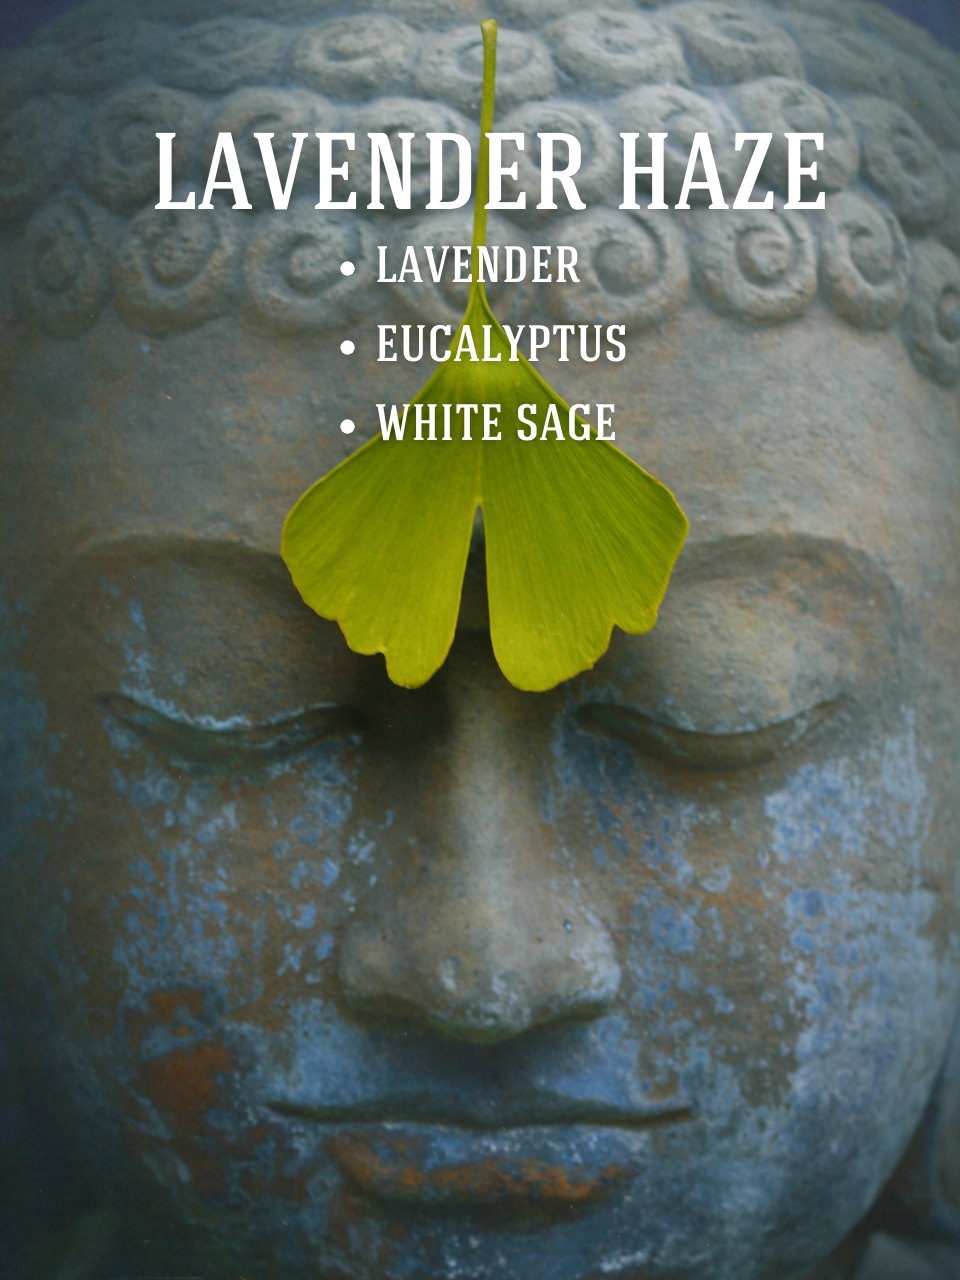 NEW! Lavender Haze Soy Candle: Smoked Lavender, Eucalyptus, White Sage